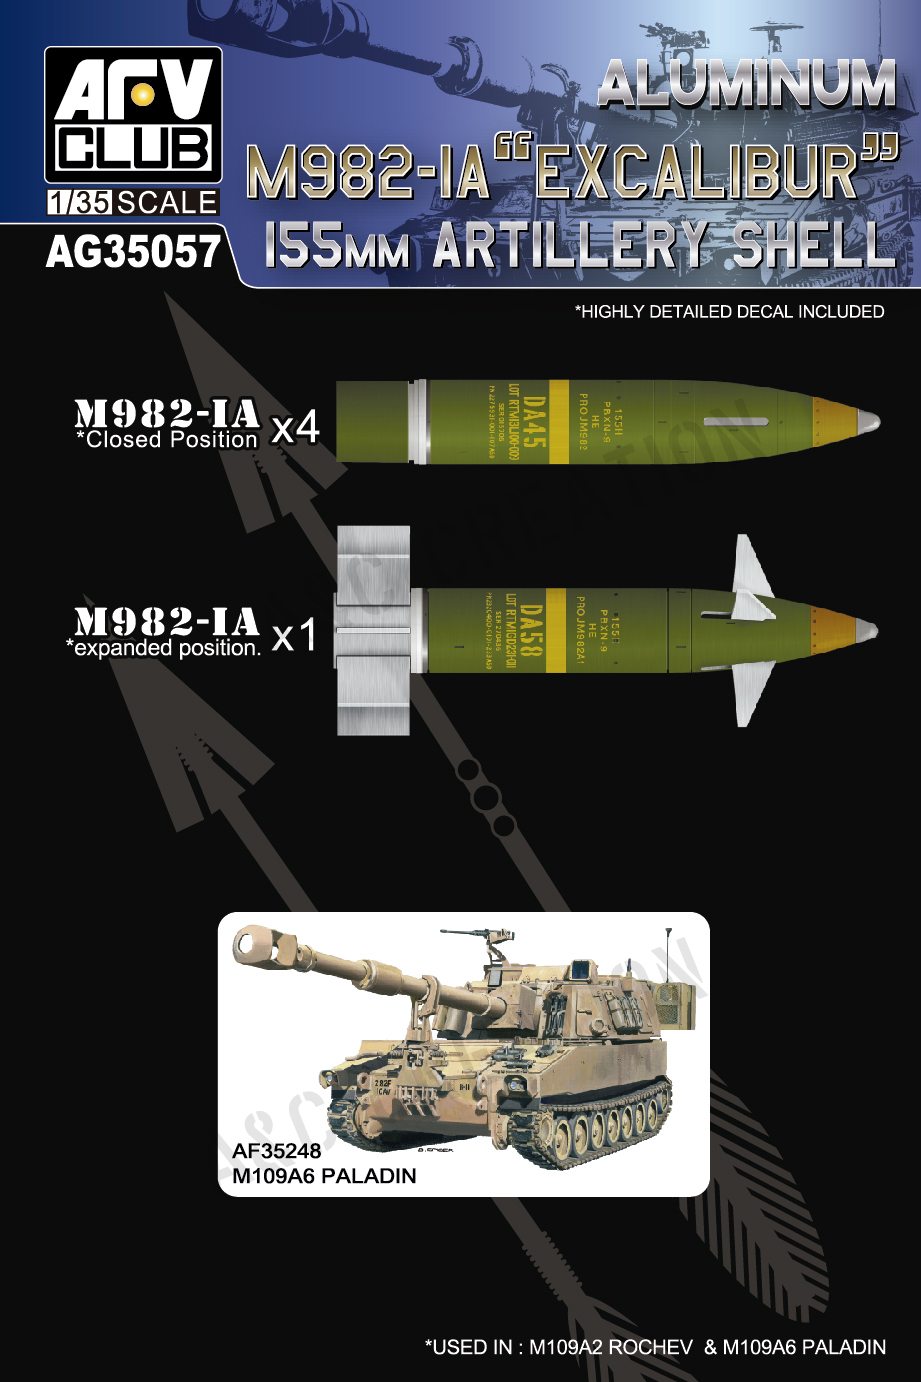 AG35057 M982-1A Excalibur 155mm Artillery Shell